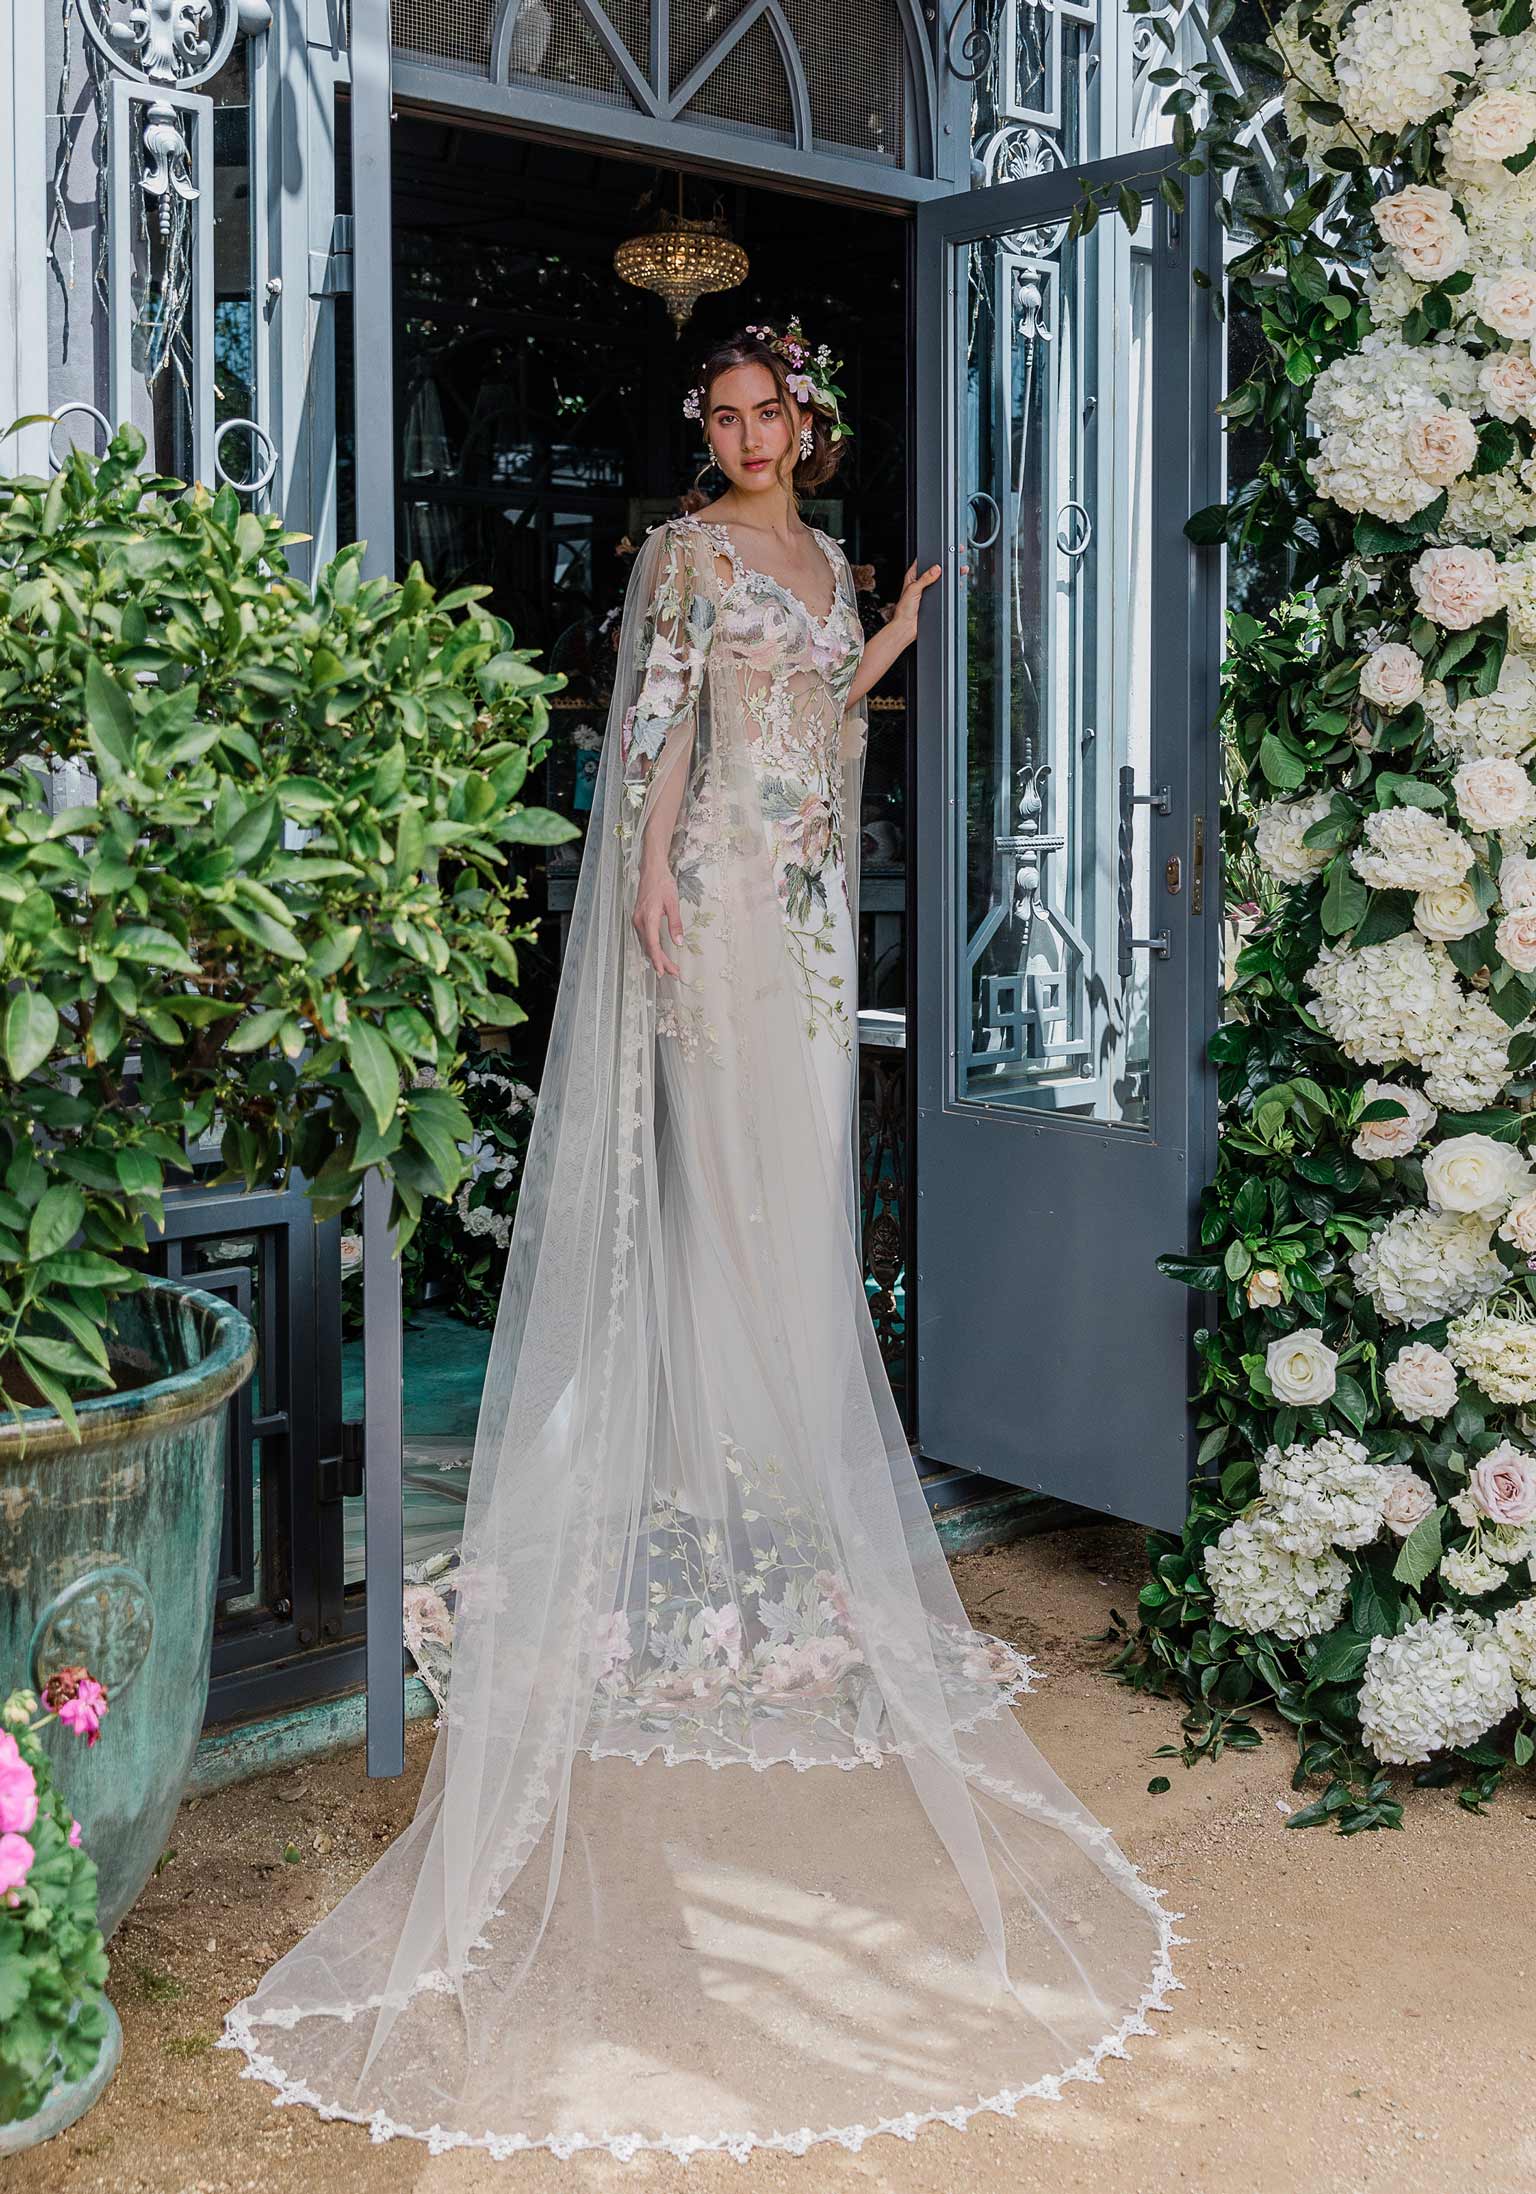 Vietnamese floral wedding collection debuts at New York Fashion Week -  VnExpress International